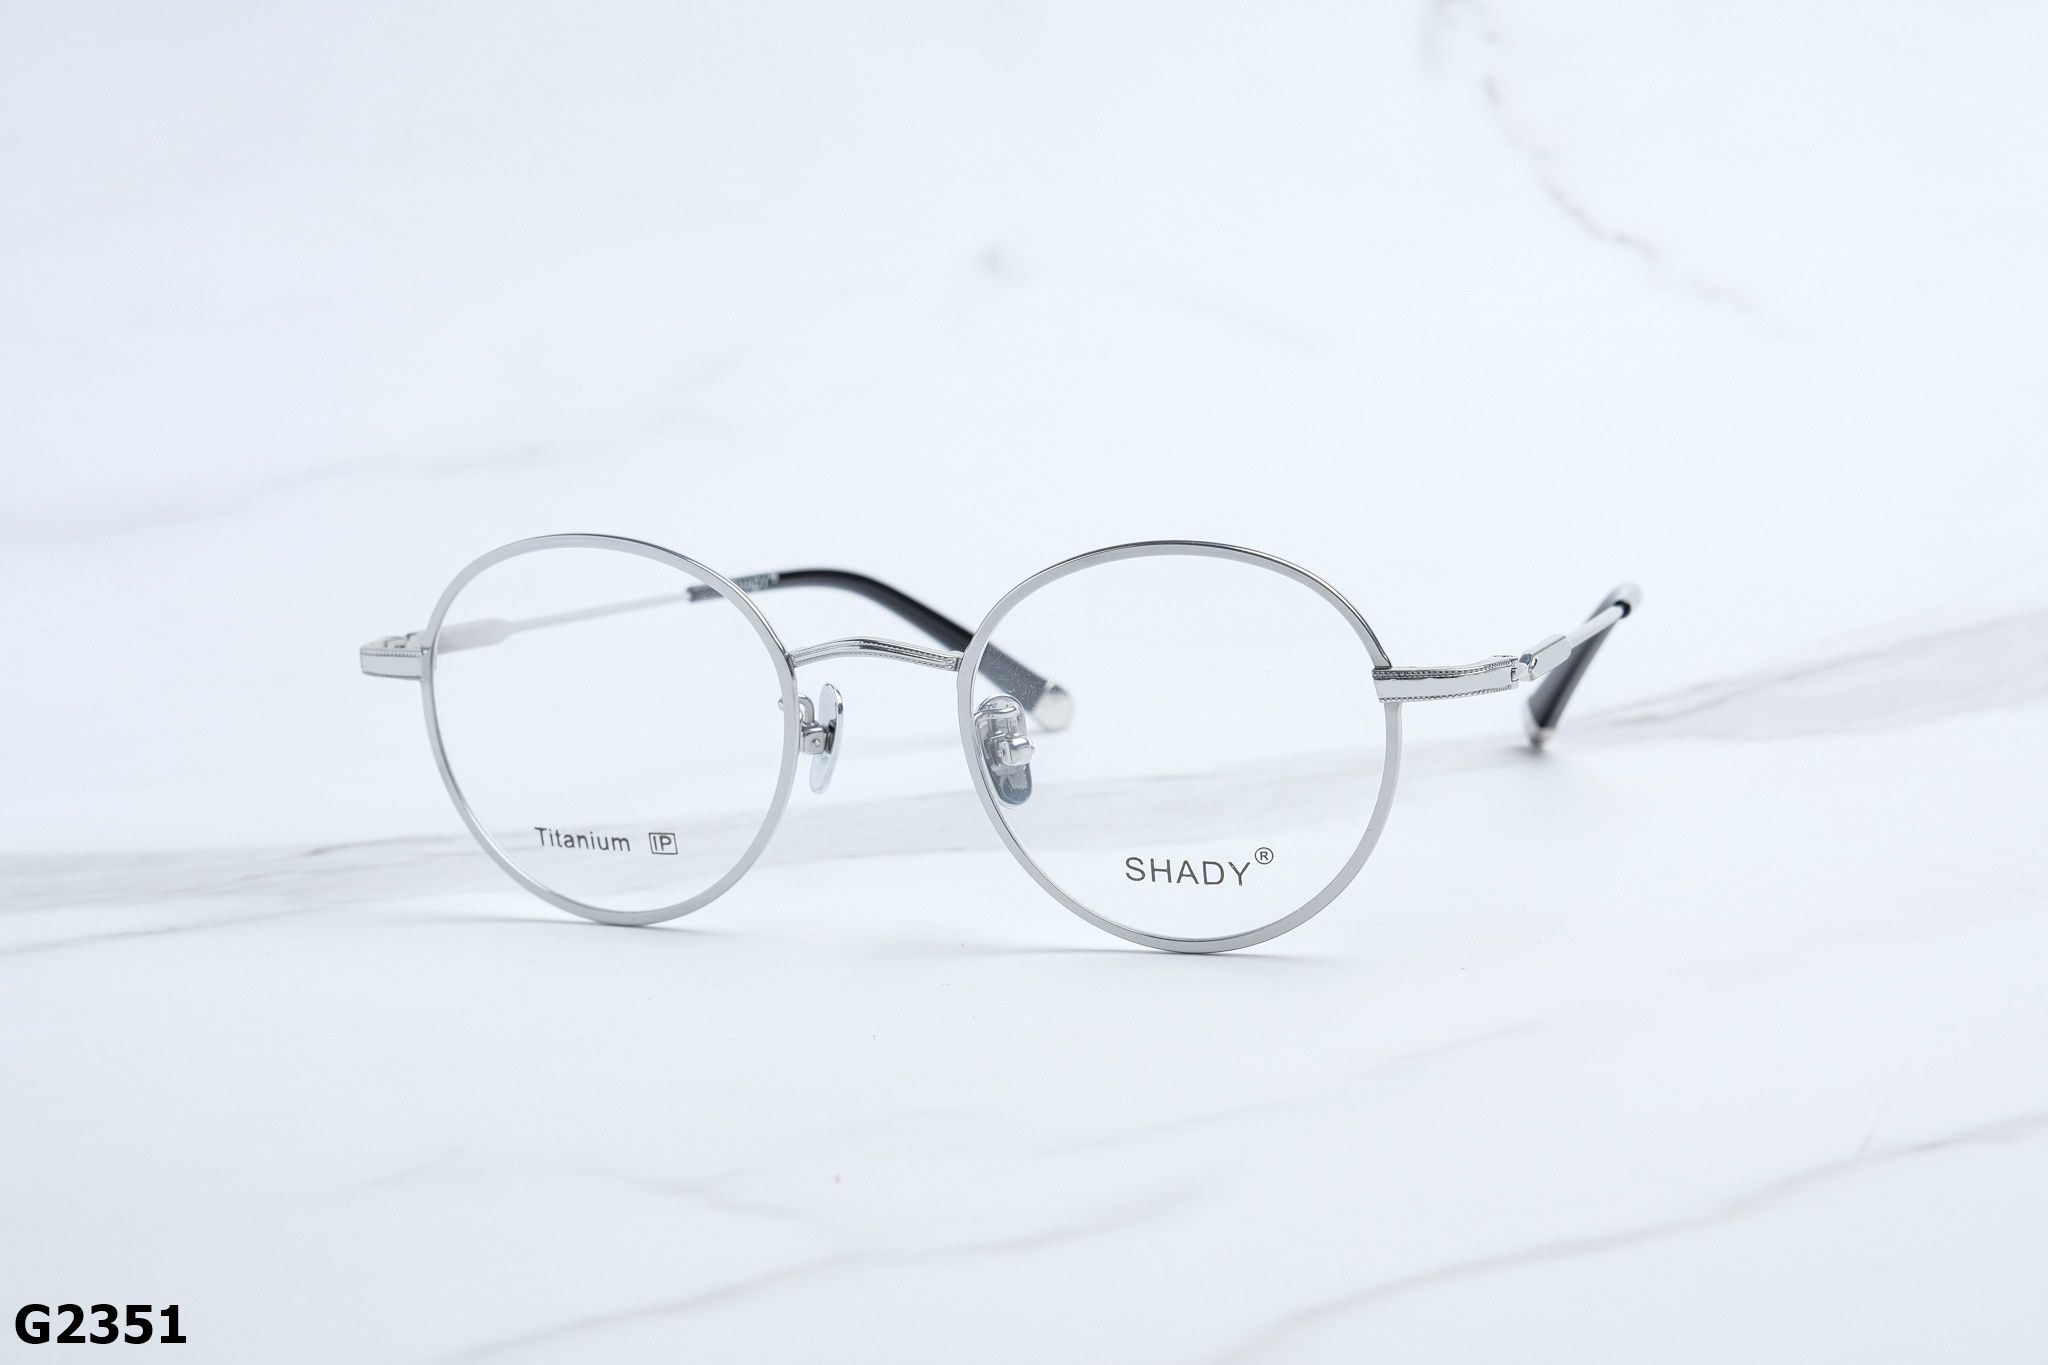  SHADY Eyewear - Glasses - G2351 